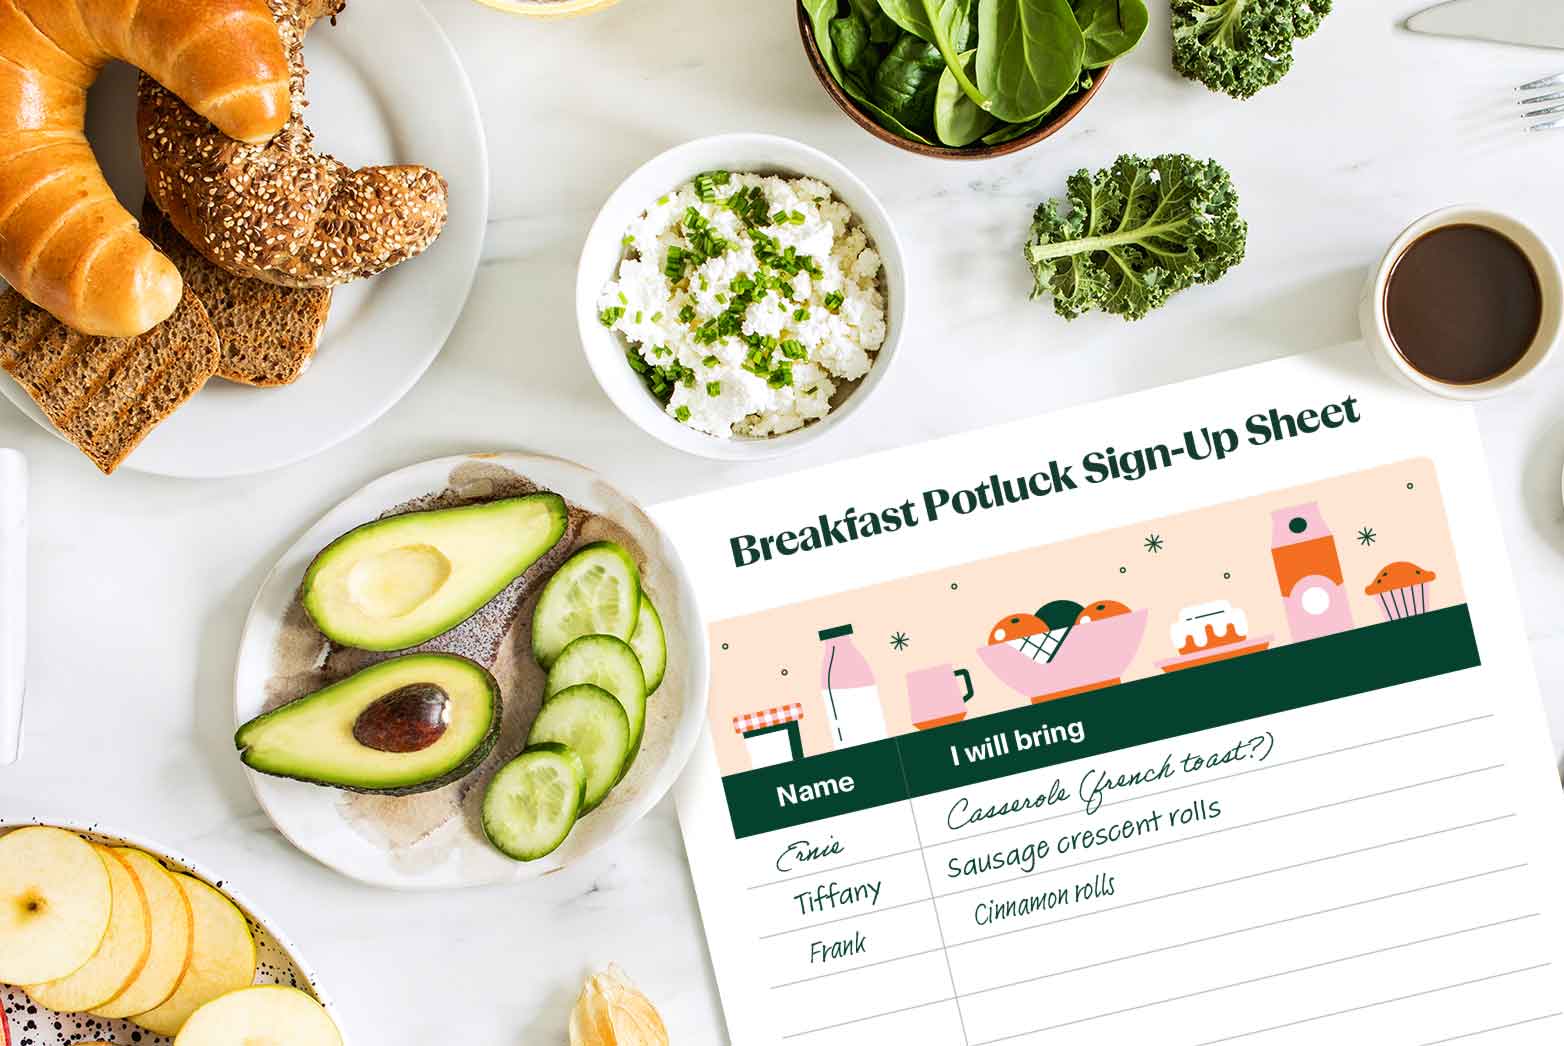 Sign-up sheet for breakfast potluck